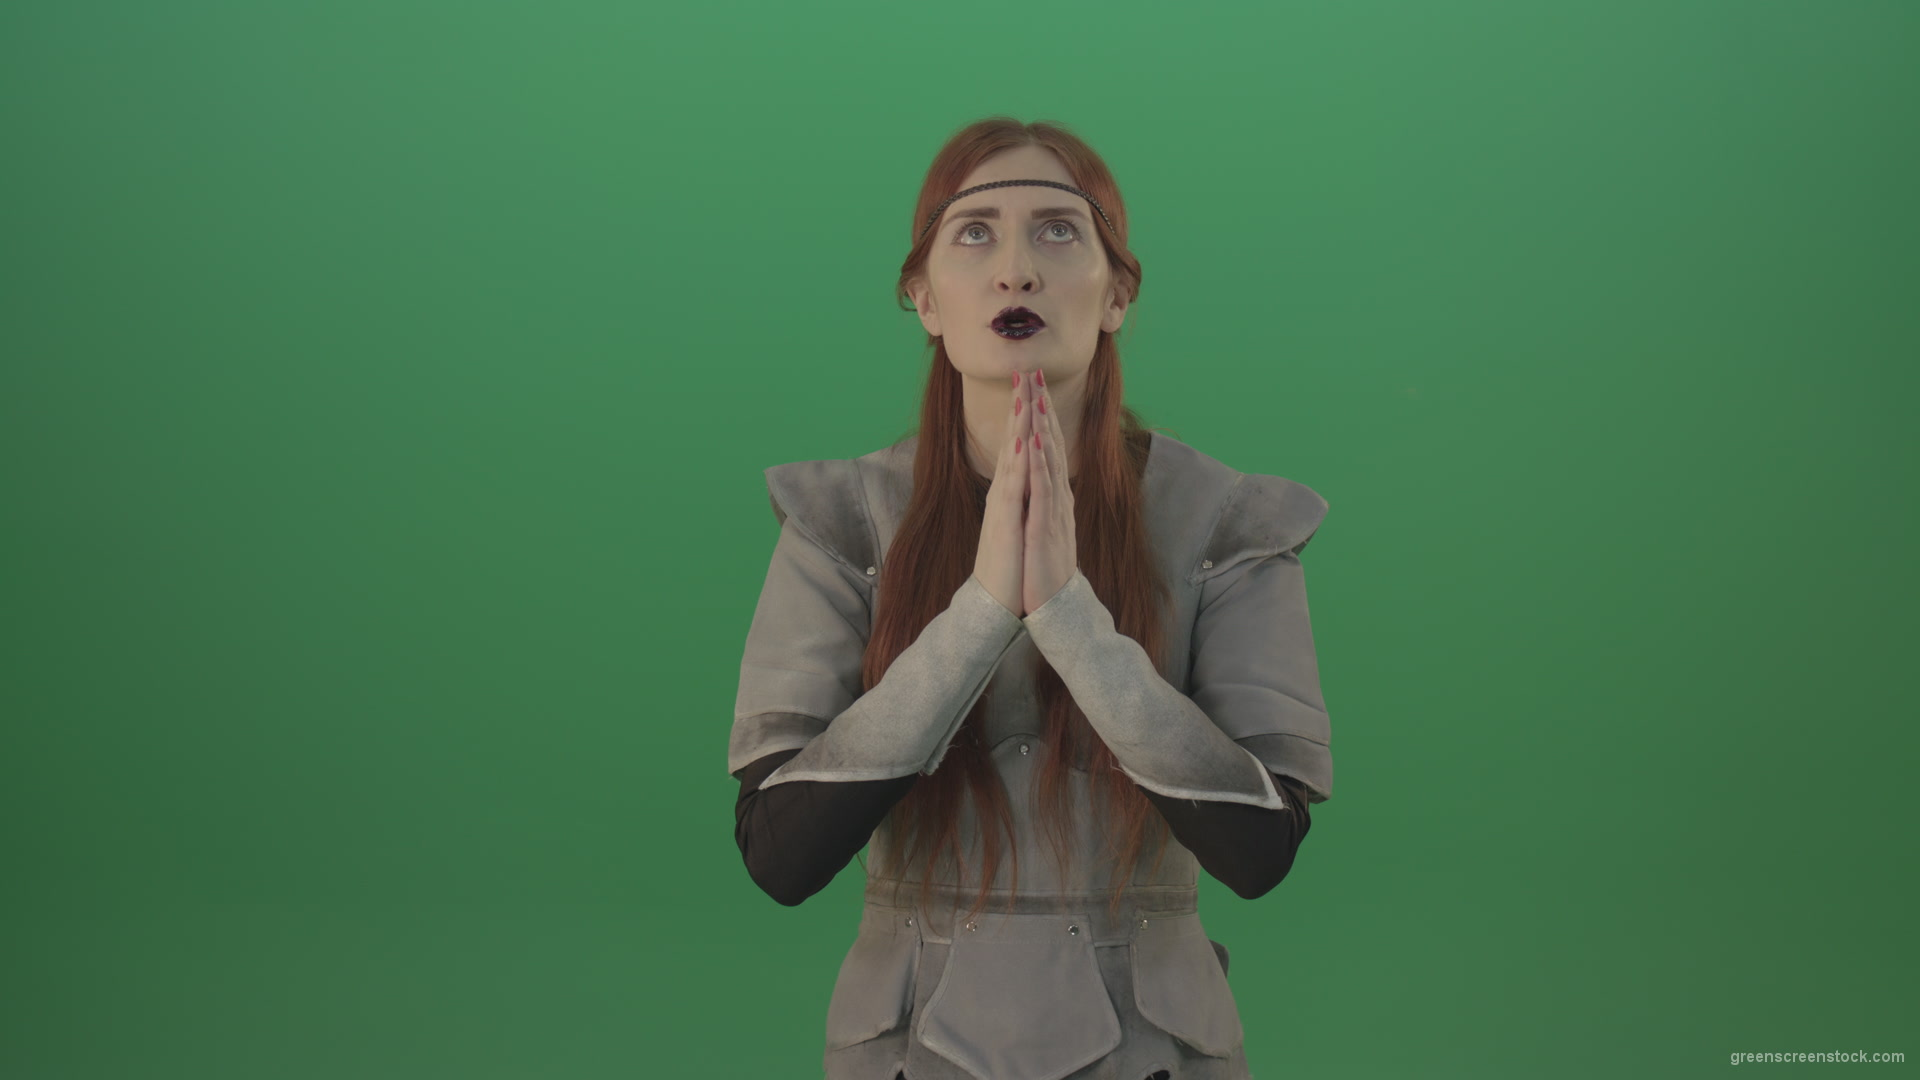 Red-hair-girl-praying-god-in-medieval-warrior-costume-in-green-screen-studio_008 Green Screen Stock